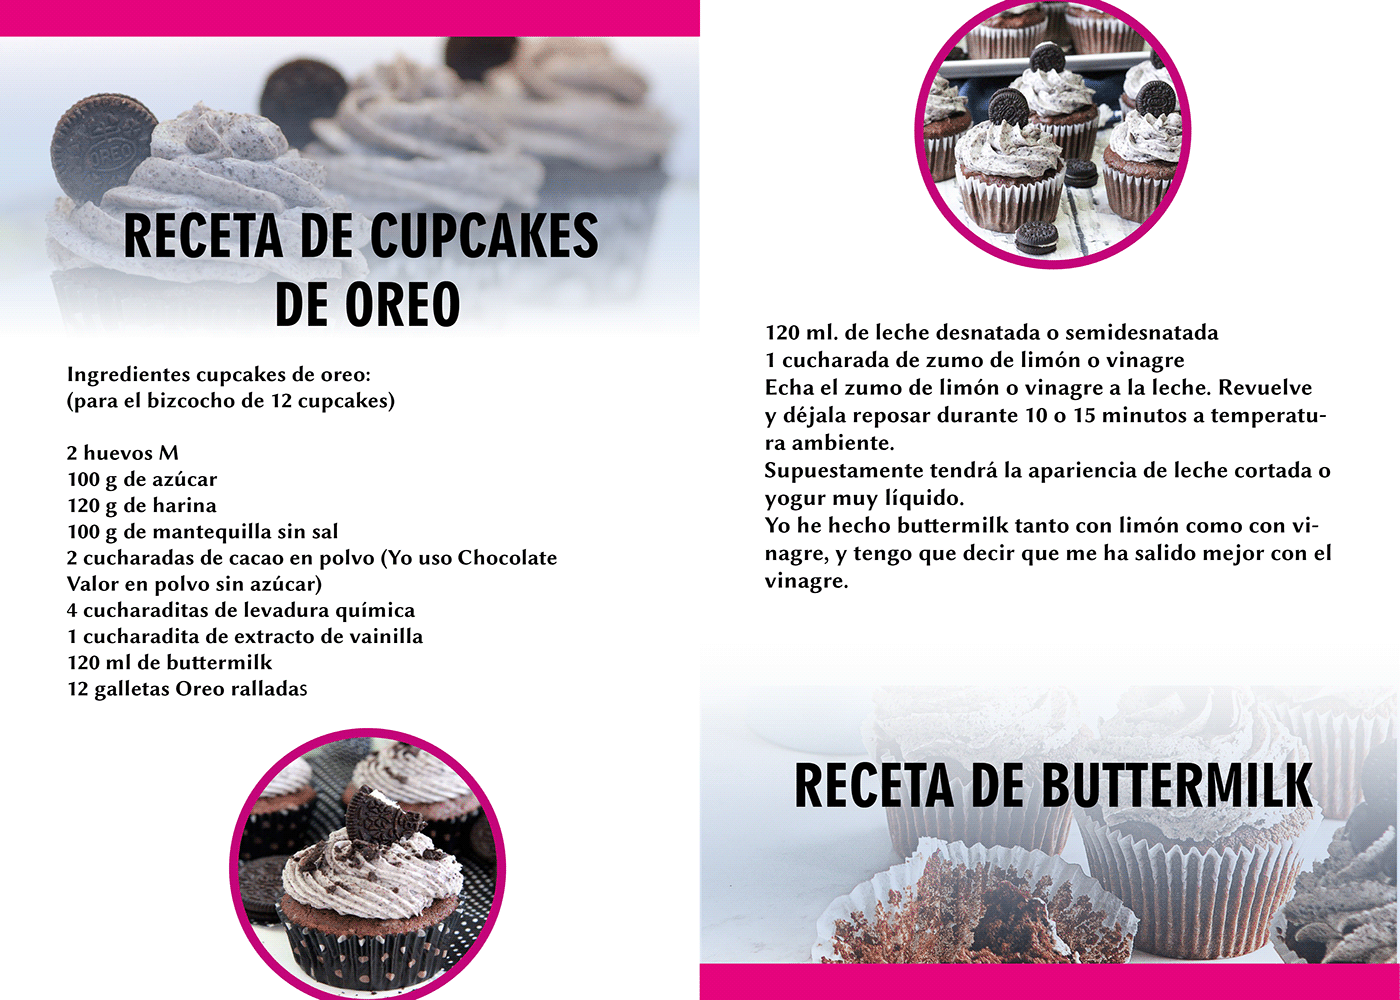 cupcakes diptych artwork tourism recipe infographic